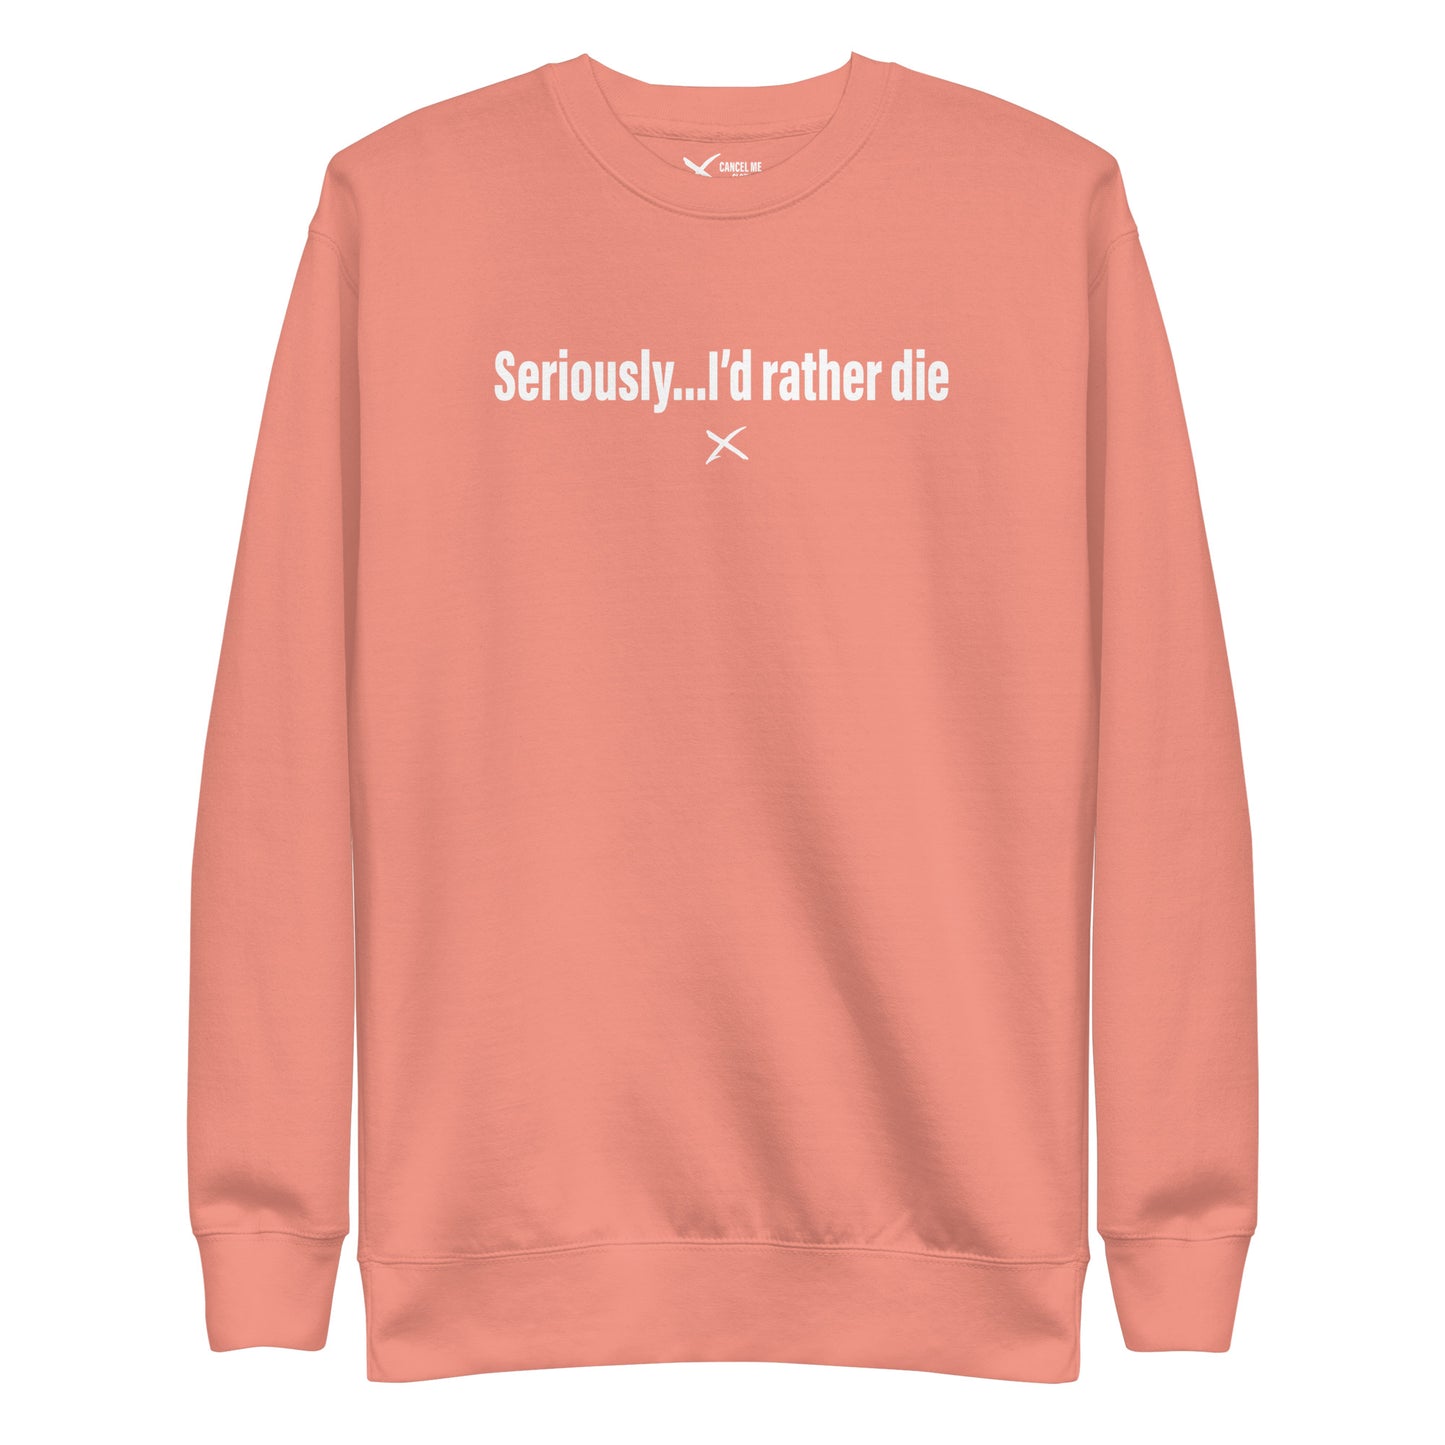 Seriously...I'd rather die - Sweatshirt